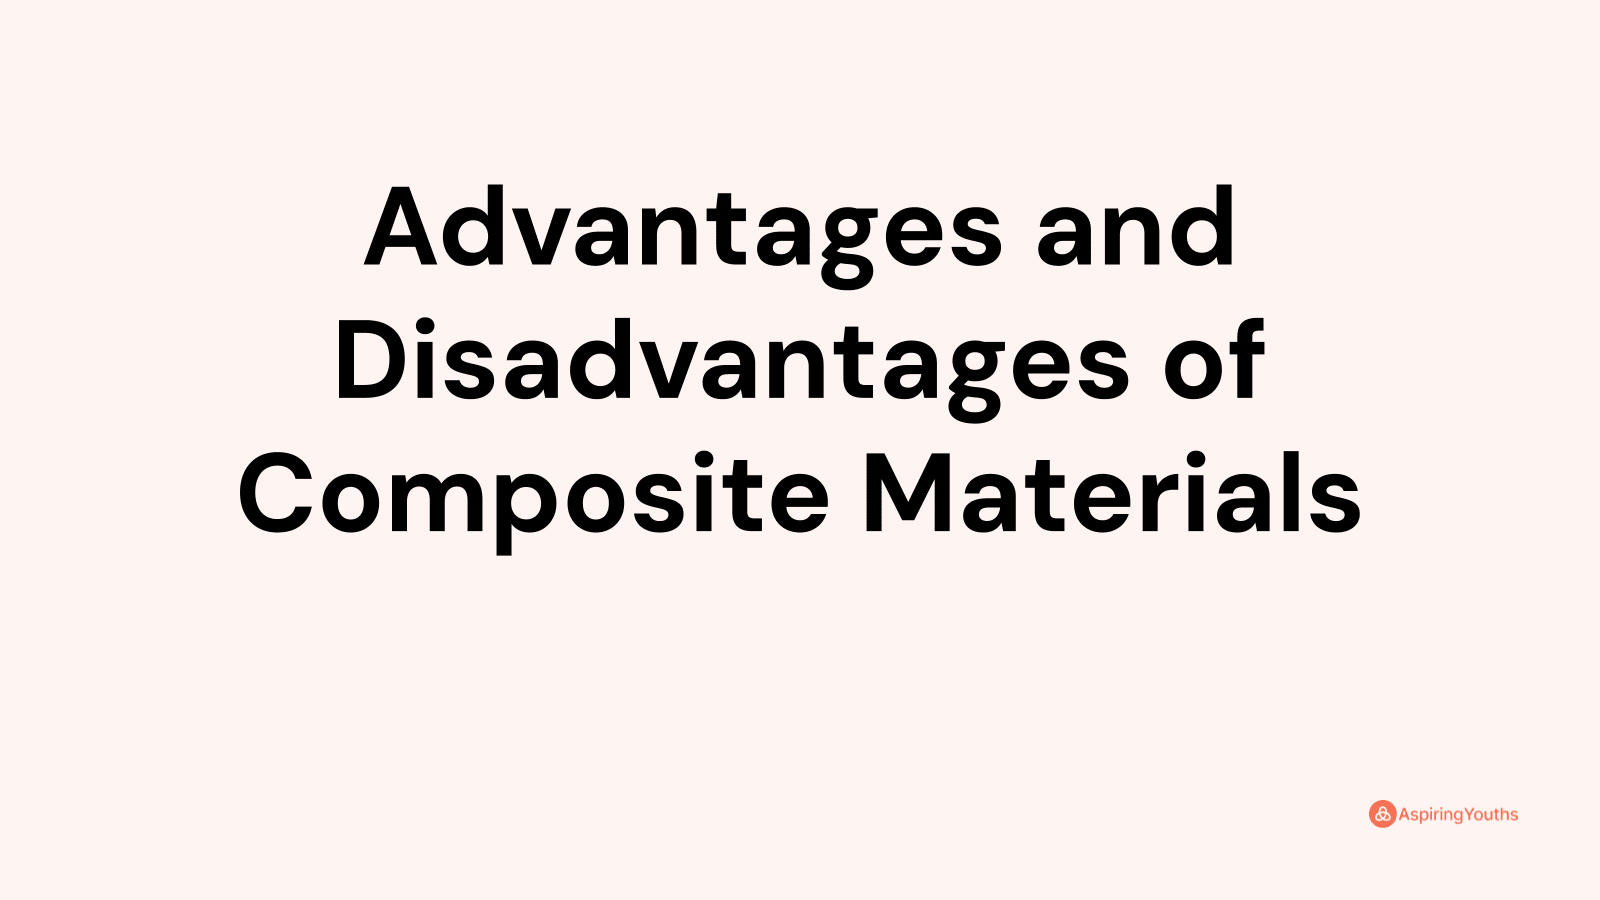 Advantages and disadvantages of Composite Materials